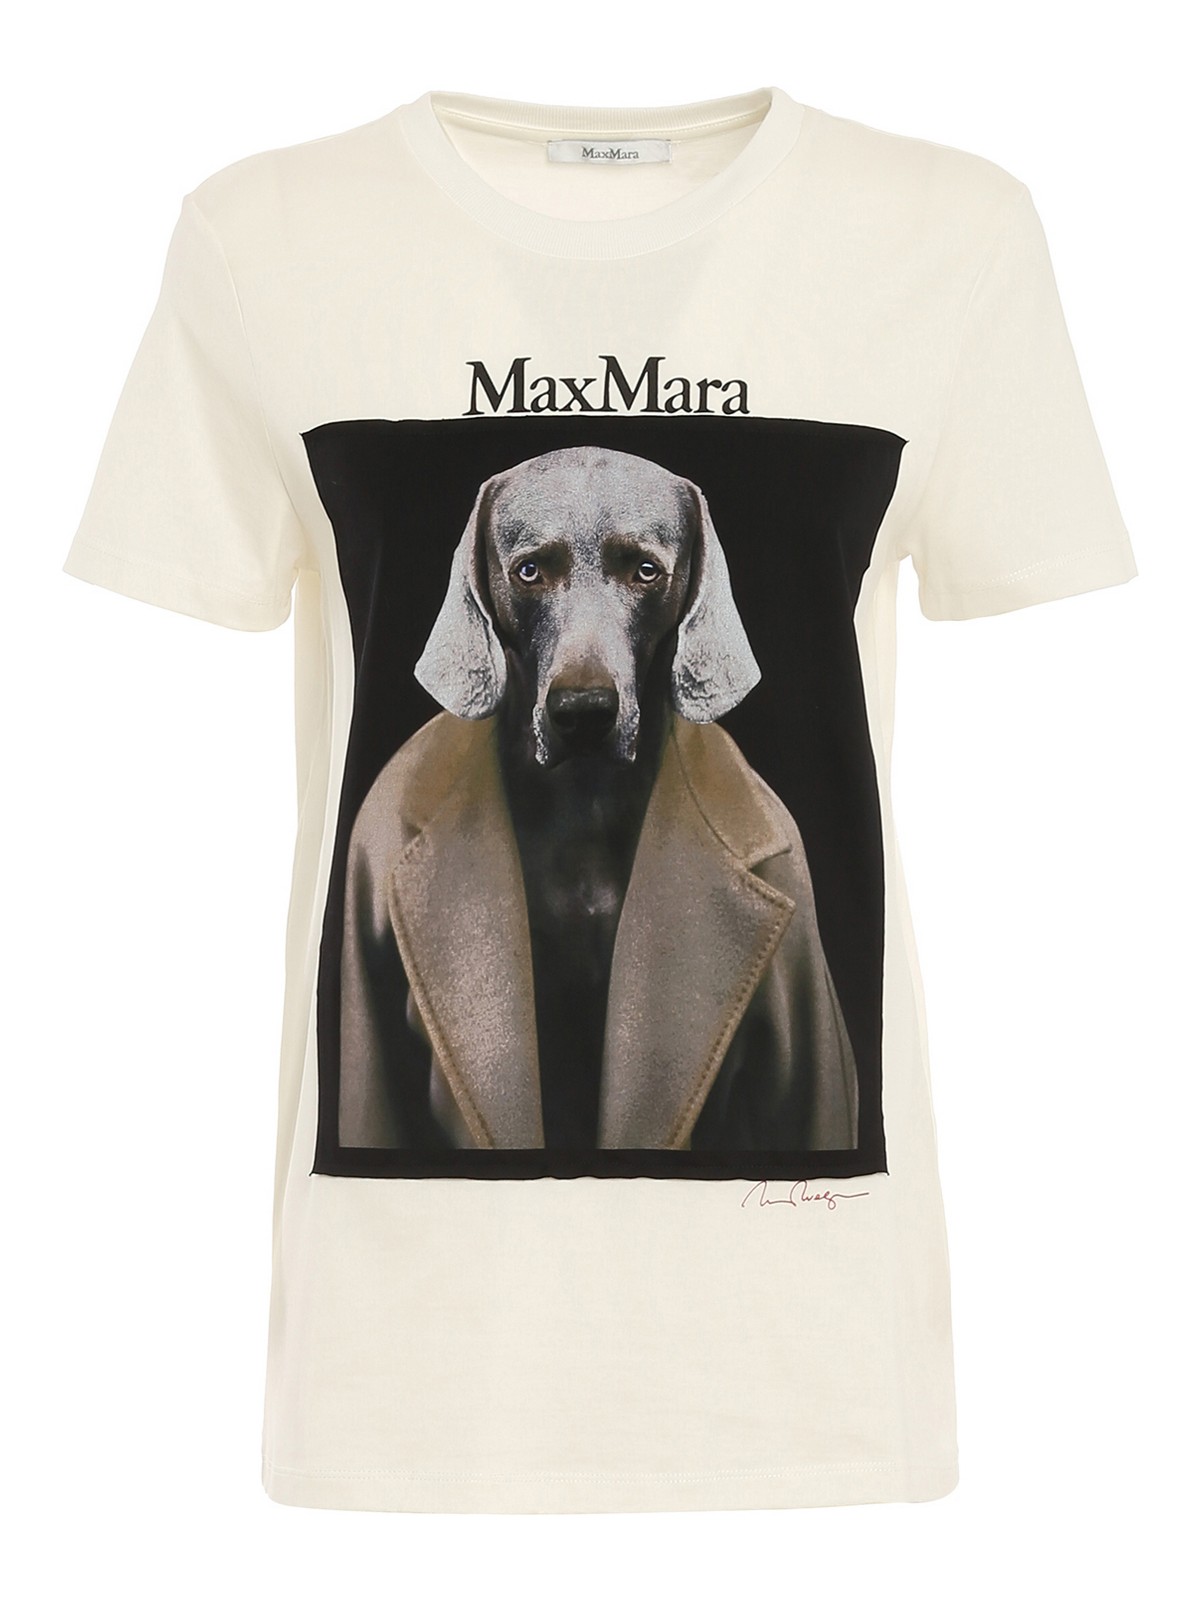 T-shirts Max Mara - Dogstar T-shirt - 194609196005 | Shop online at iKRIX